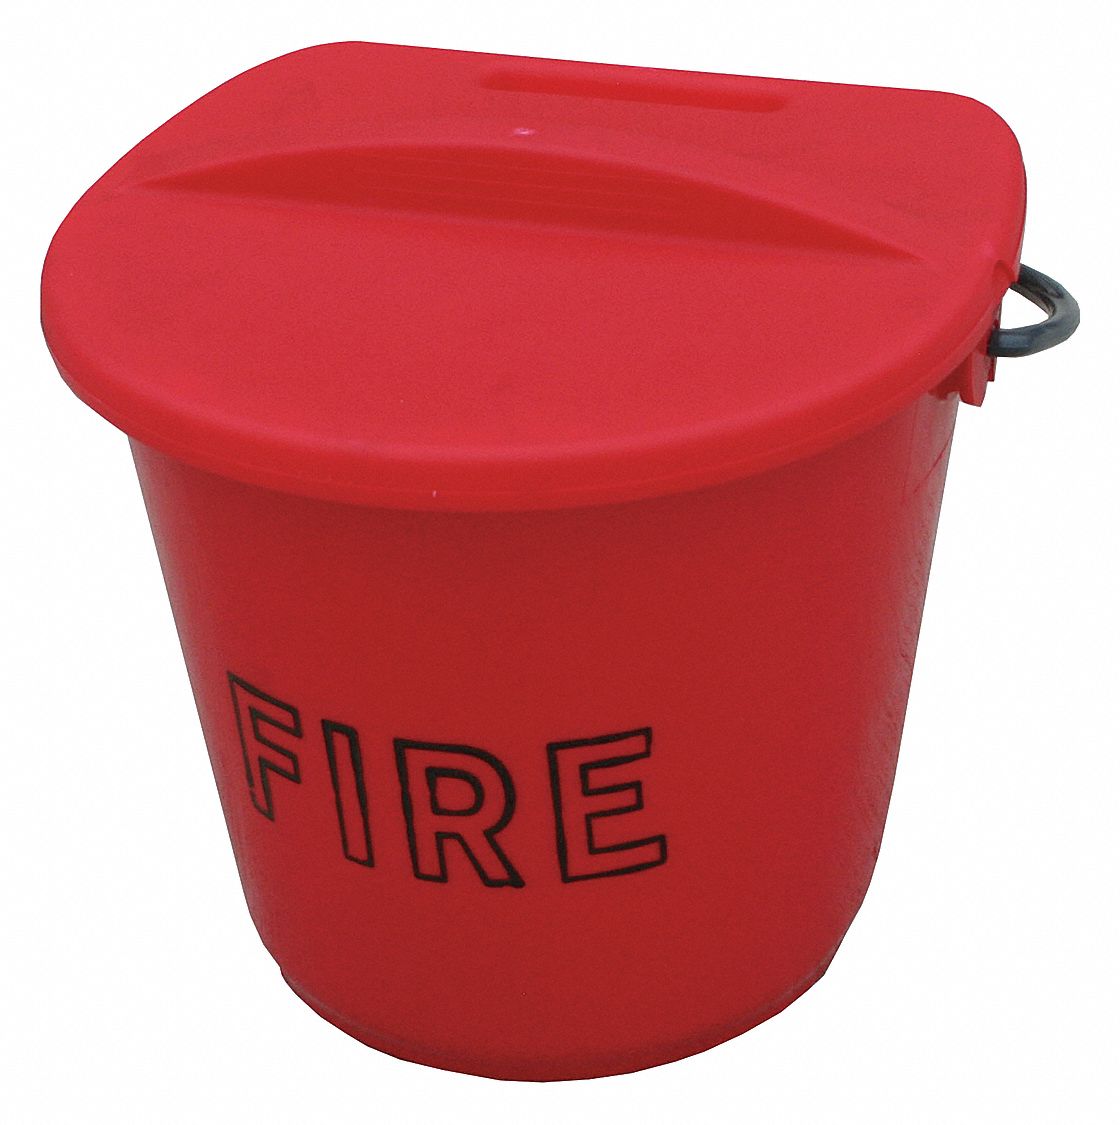 Fire Bucket: Holds 2.5 gal